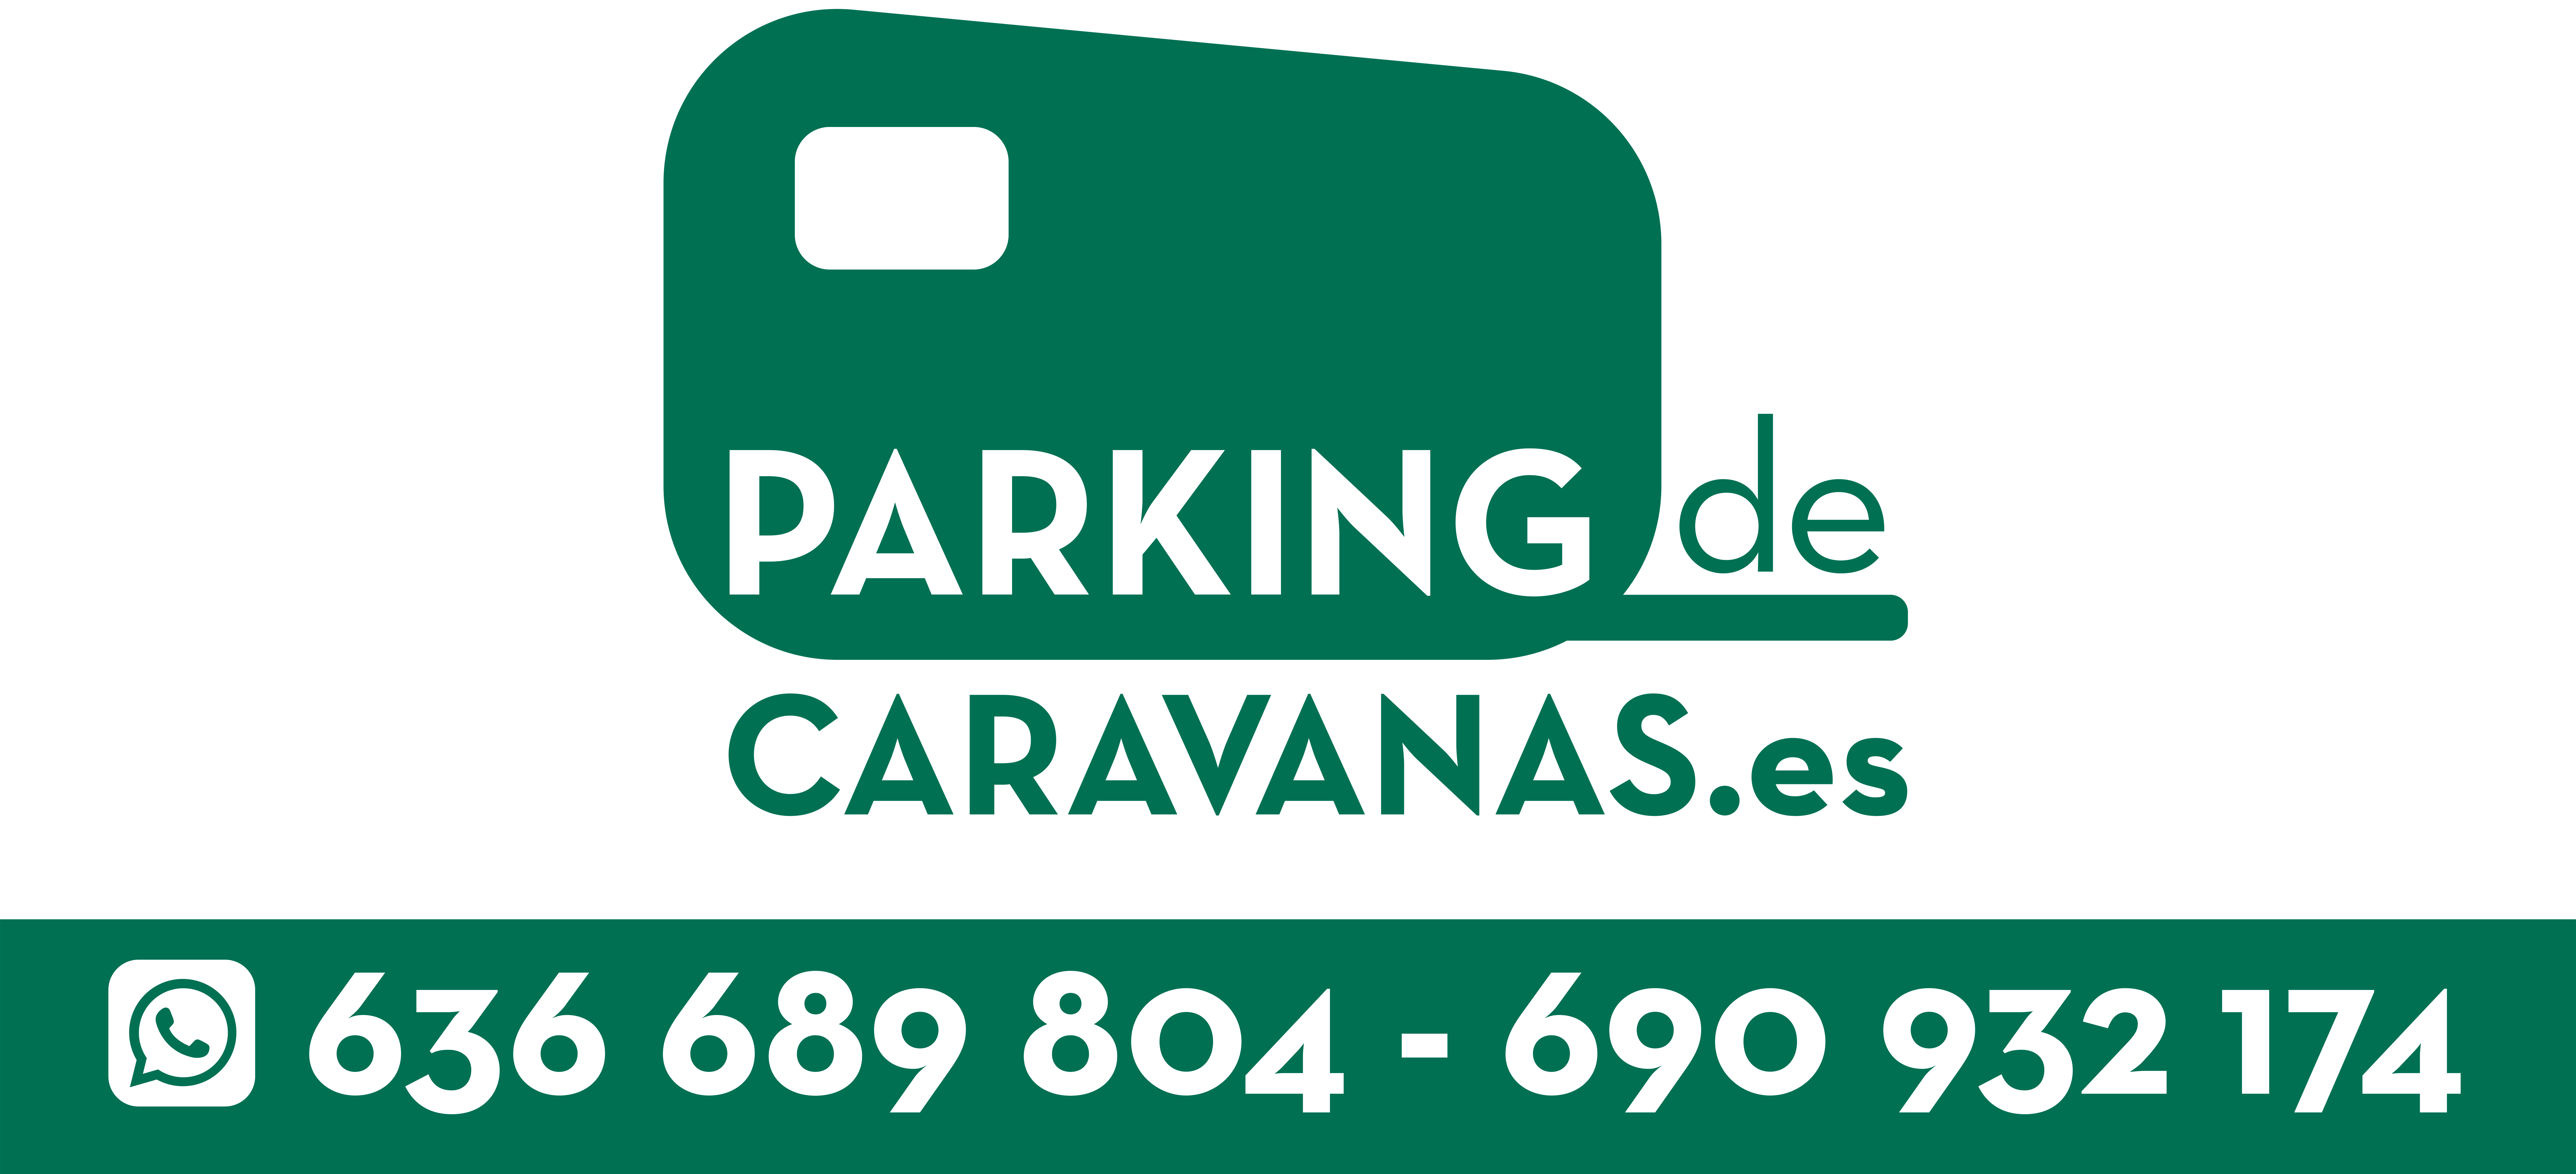 Parking de Caravanas